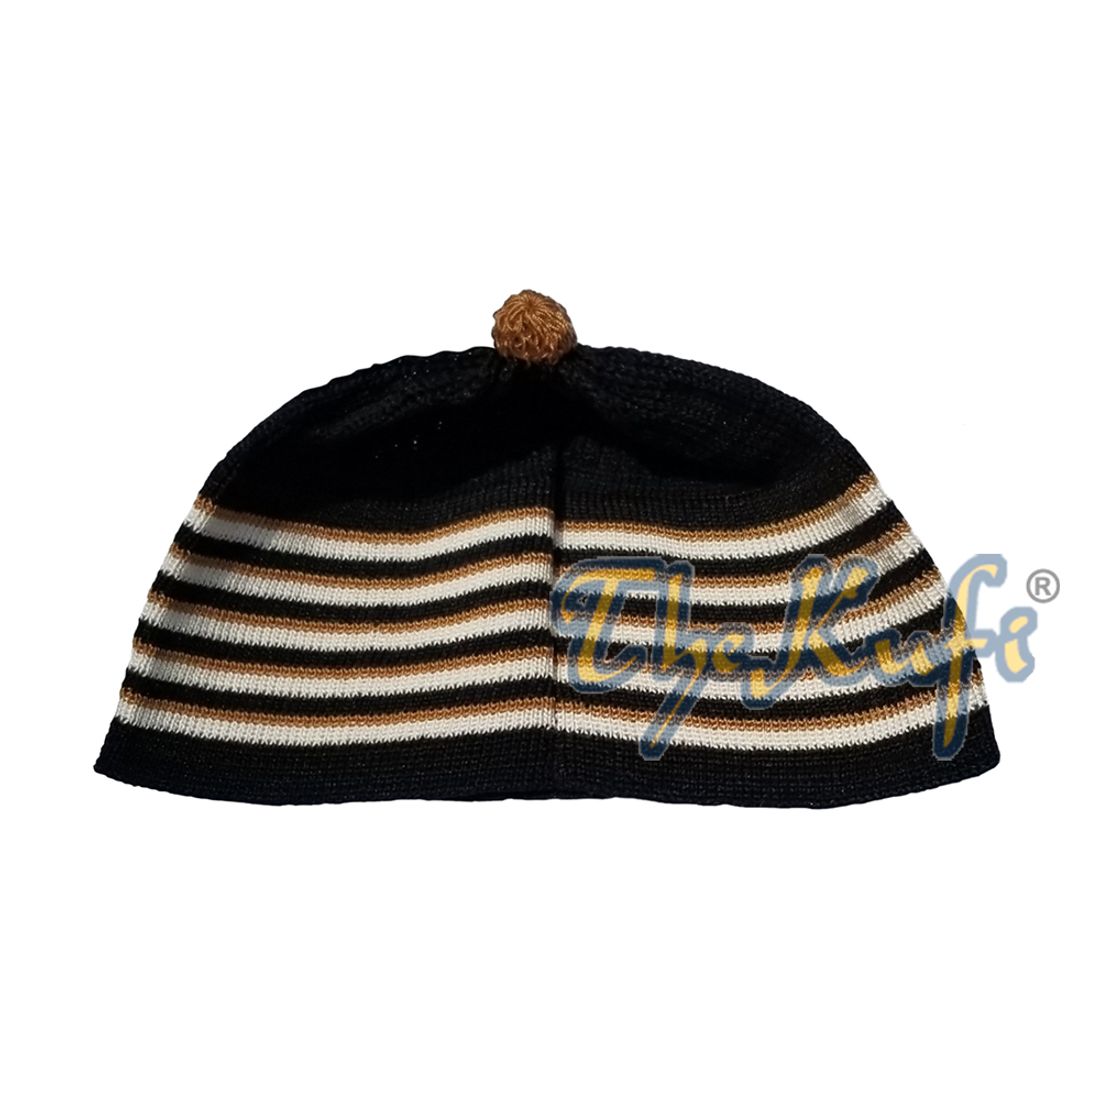 Baby Kufi Black White Brown Stripes Soft Cotton Kufi Skull cap with Pom-pom Top